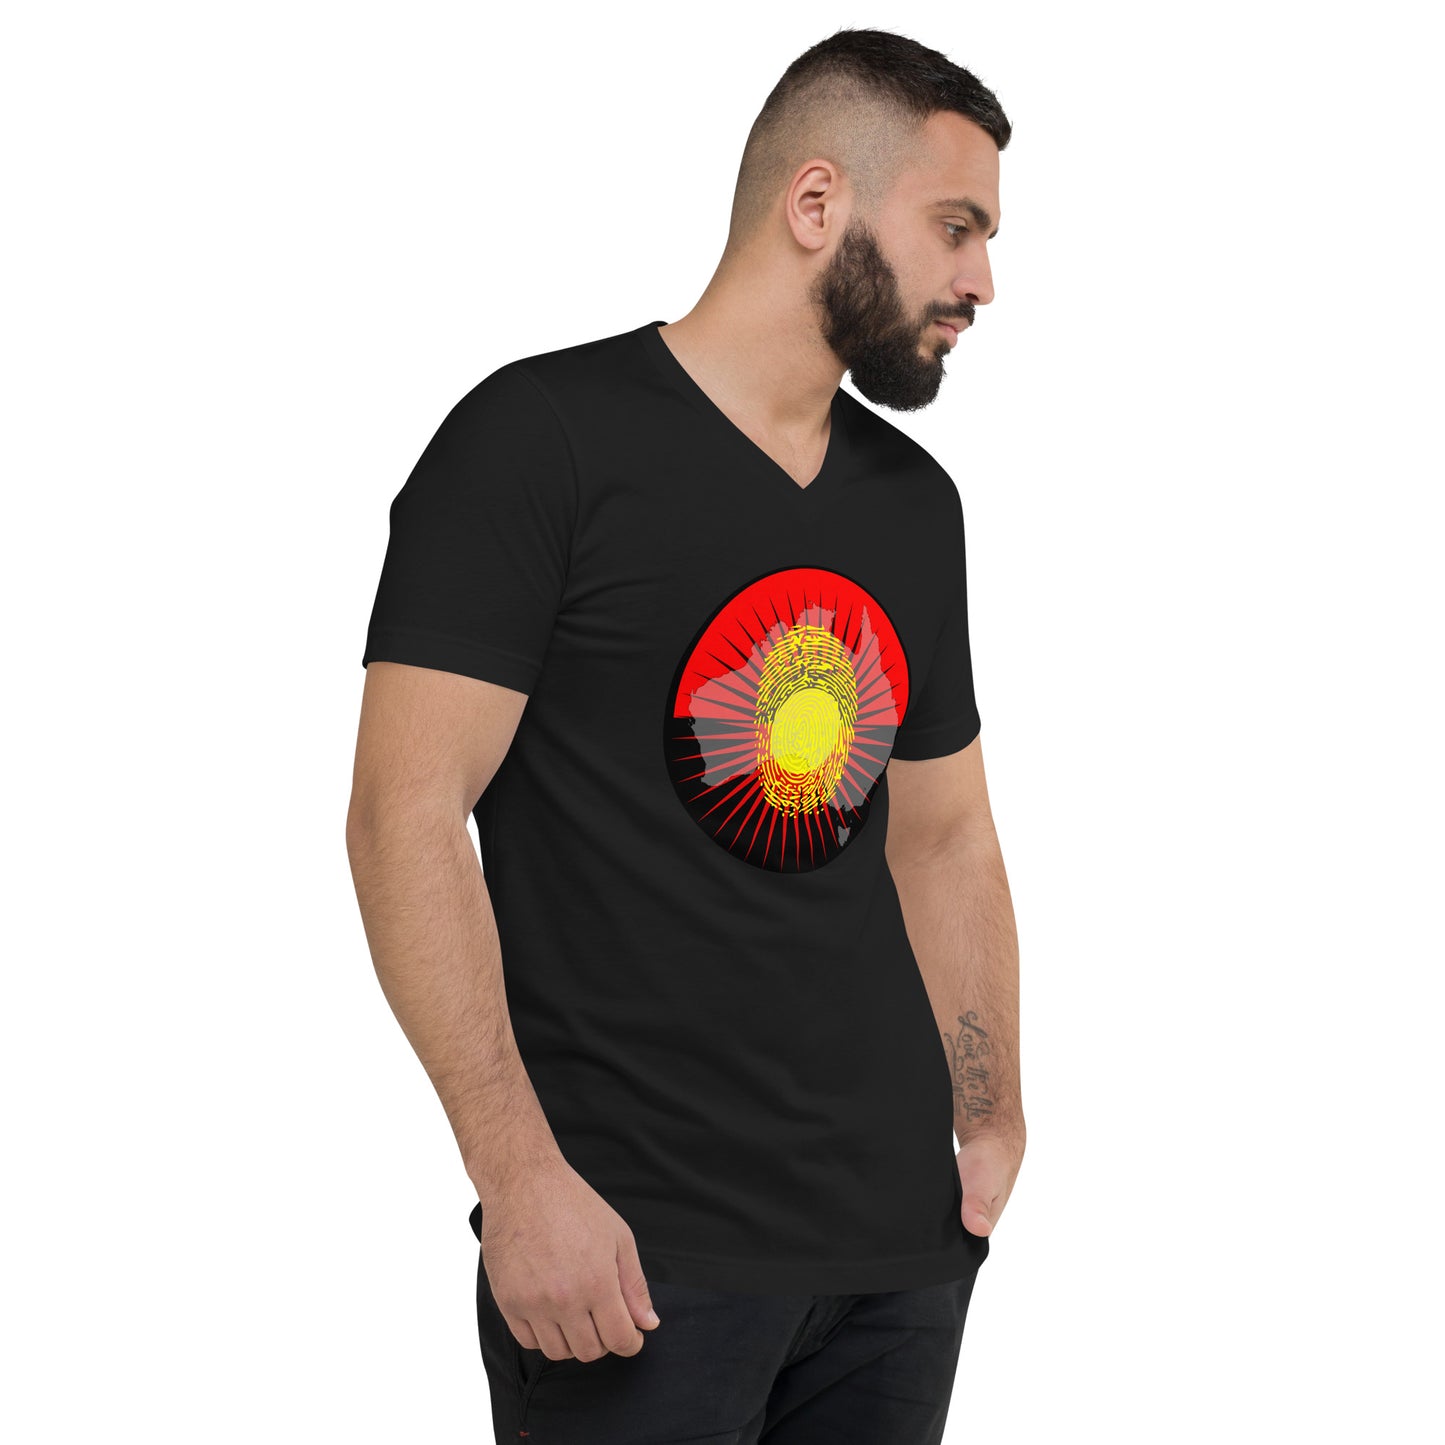 The Australian Identity - Unisex Short Sleeve V-Neck T-Shirt